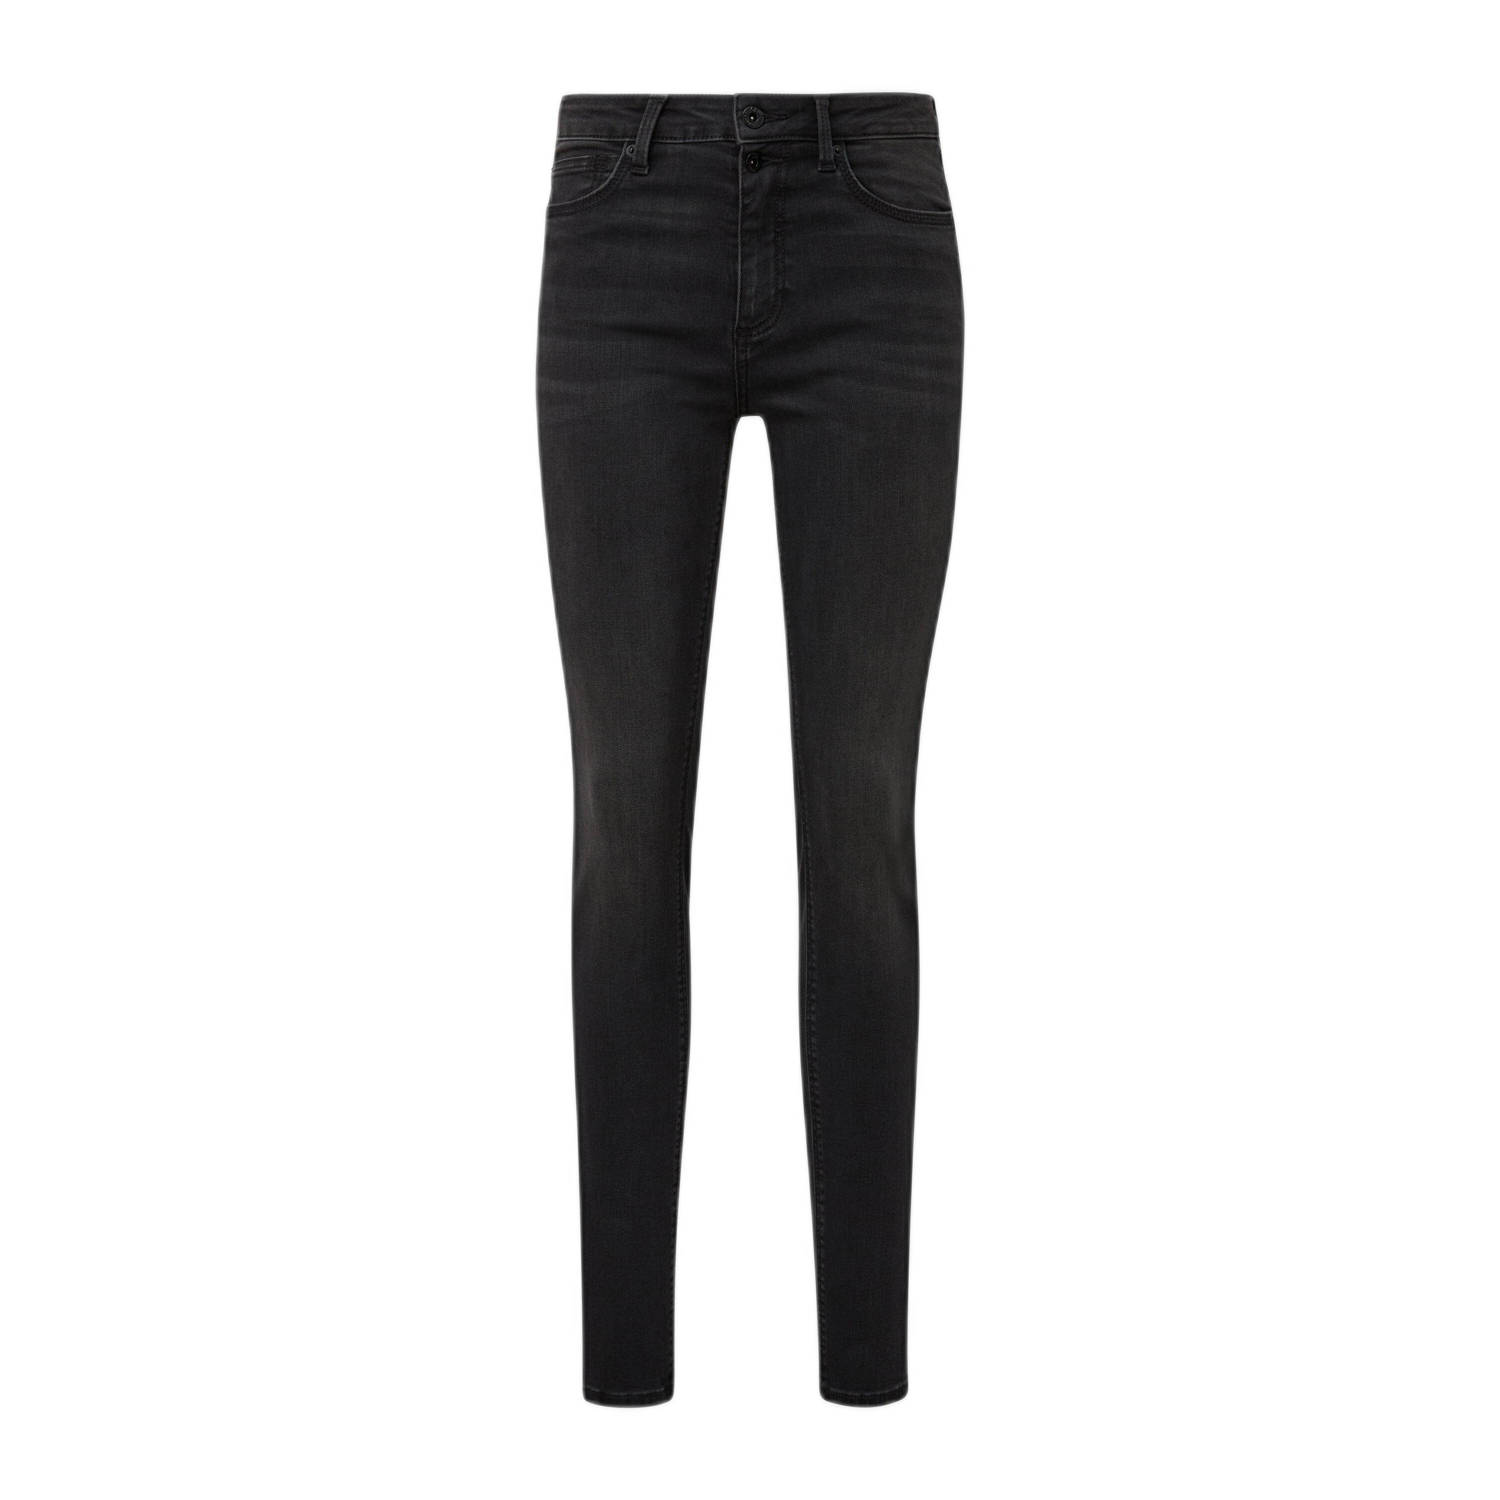 Q S by s.Oliver high waist skinny jeans black denim